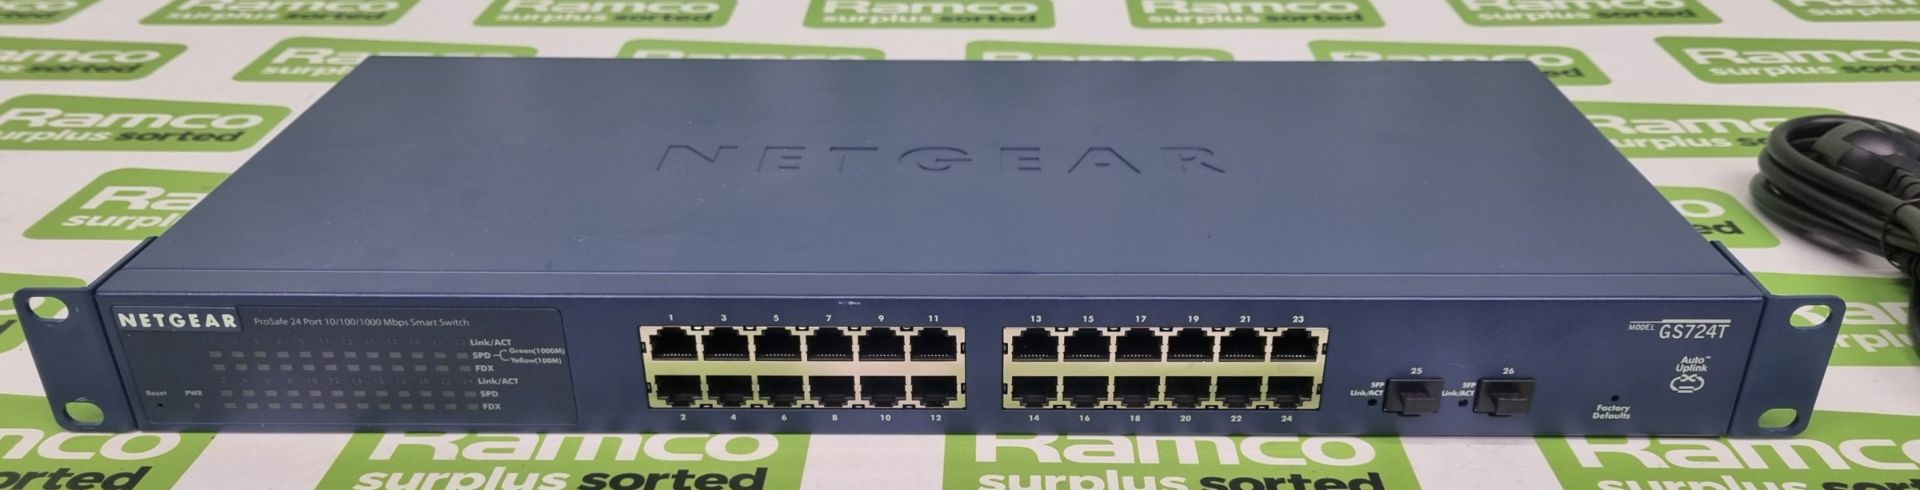 Netgear GS742T 24 port gigabit network switch (rack mountable) - Image 3 of 11